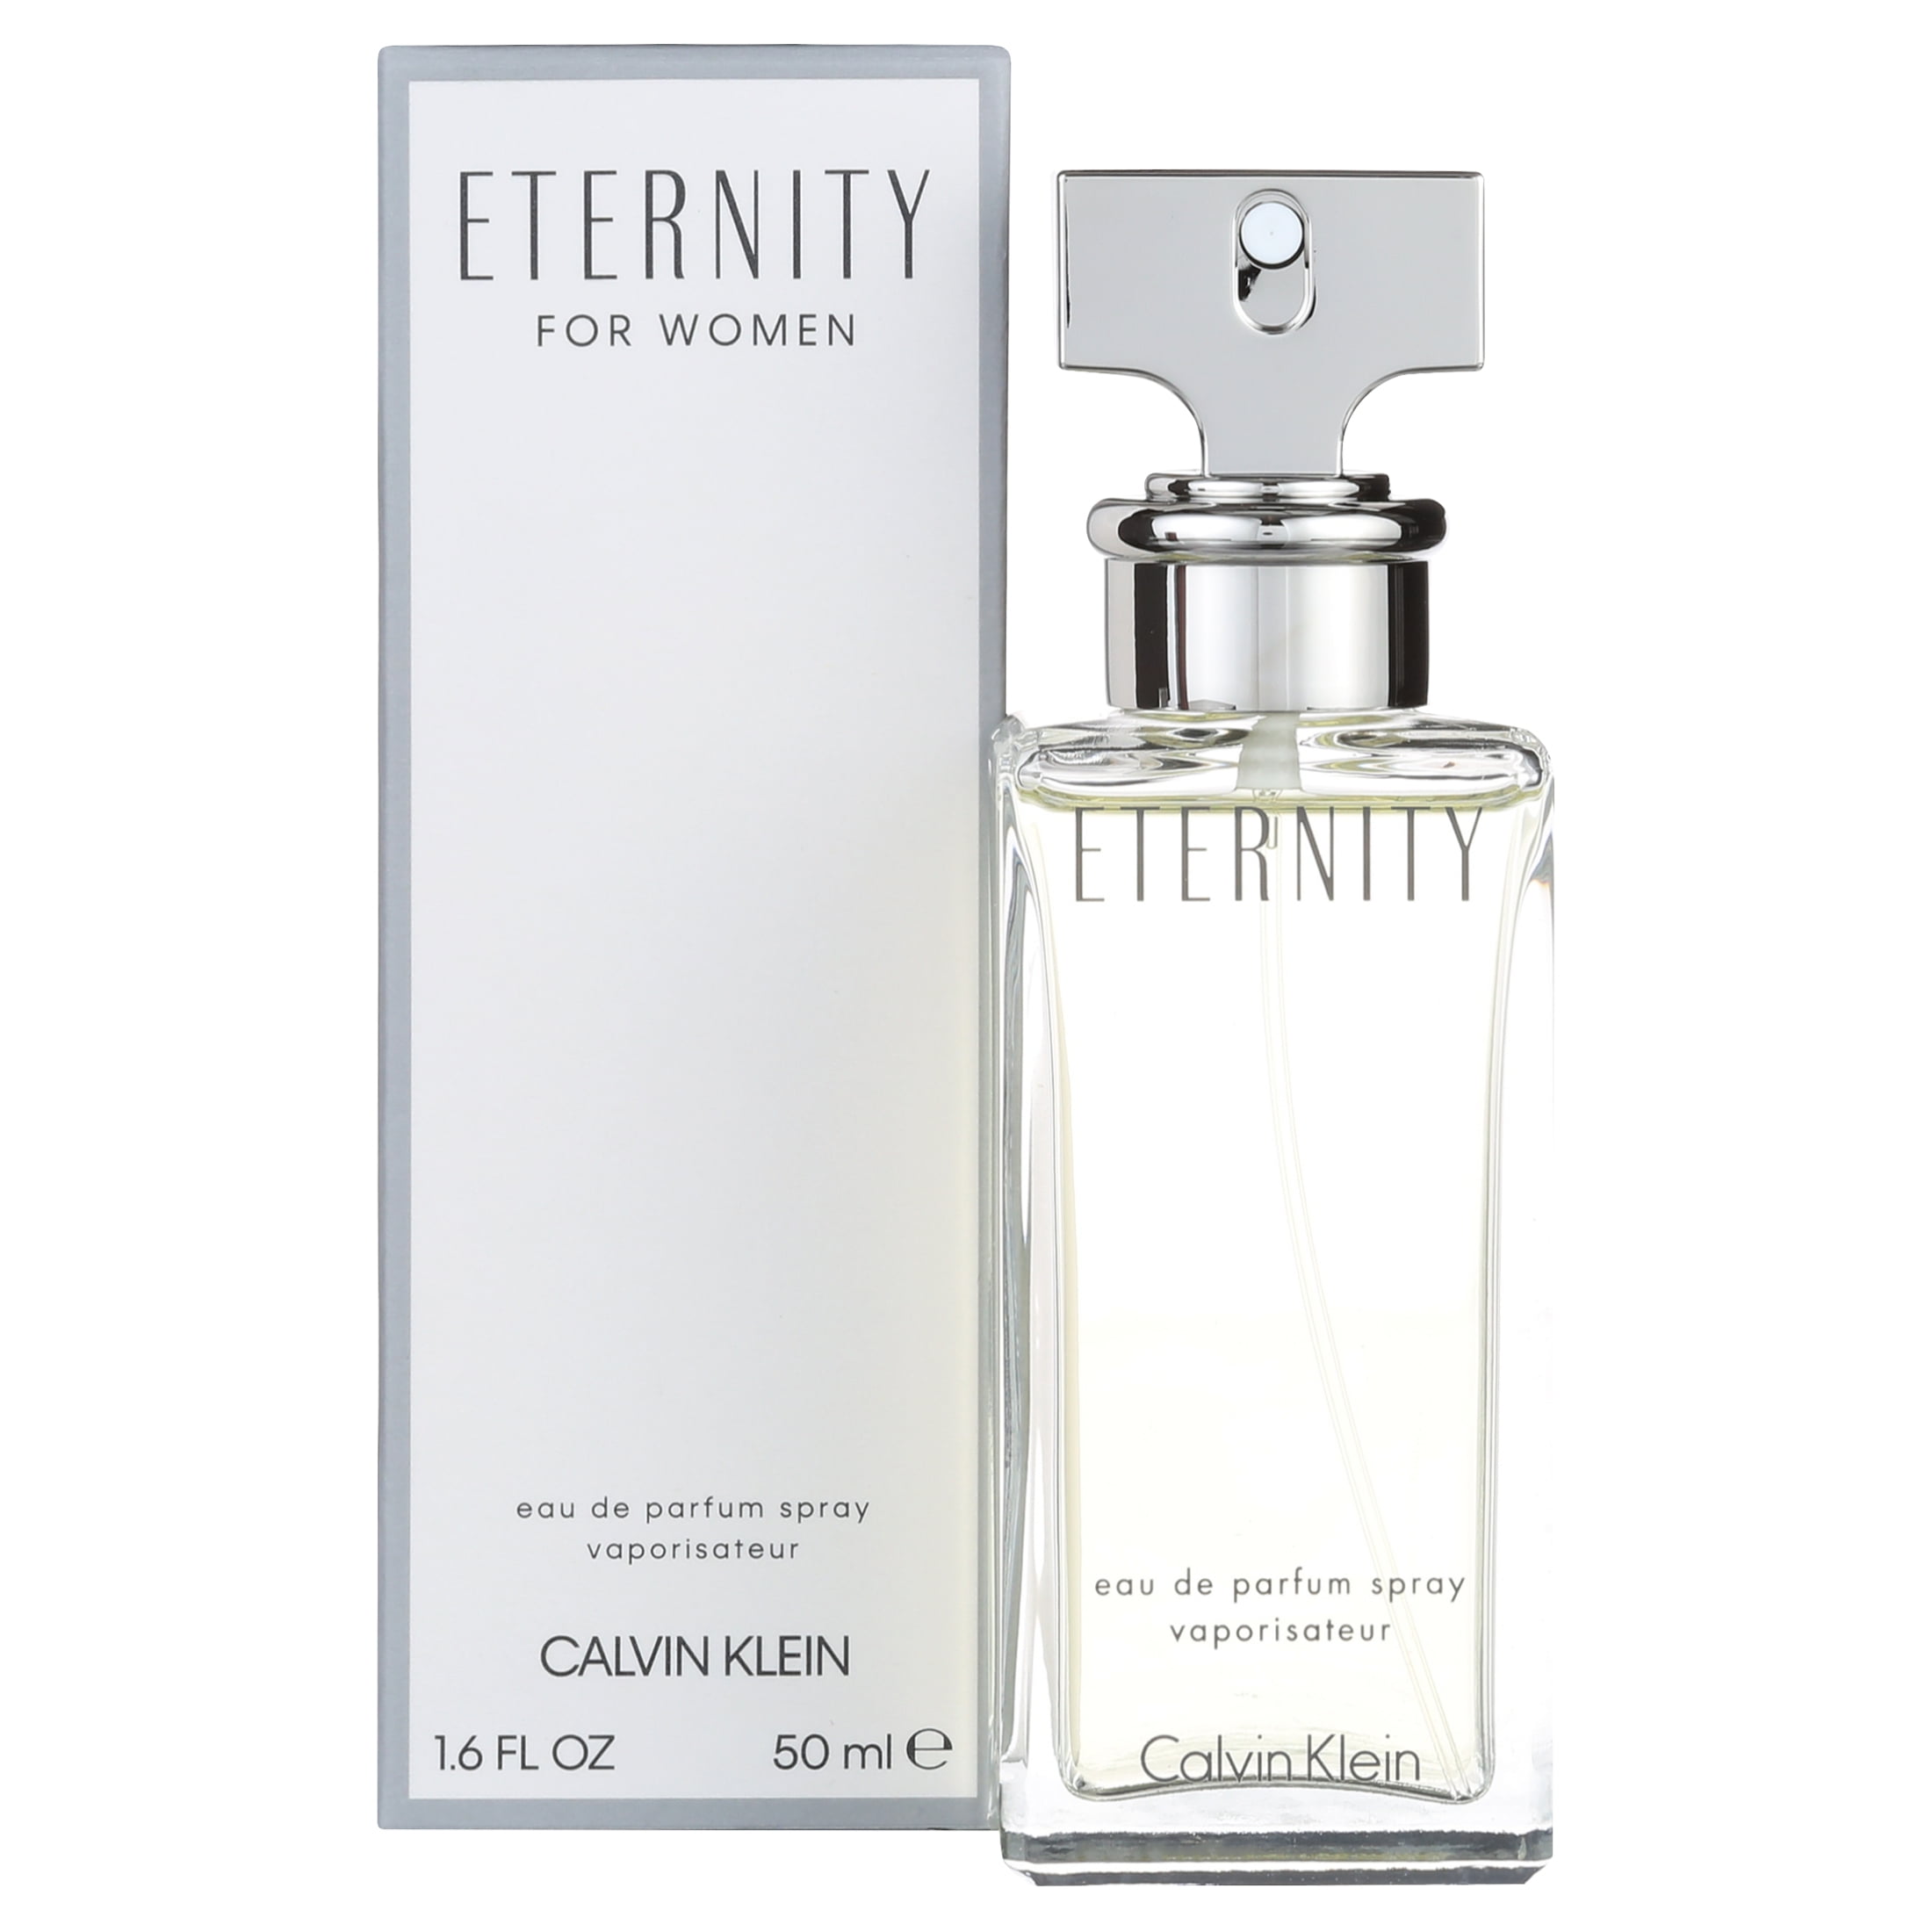 Calvin Klein Beauty Eternity Eau de Parfum, Perfume for Women,  Oz -  